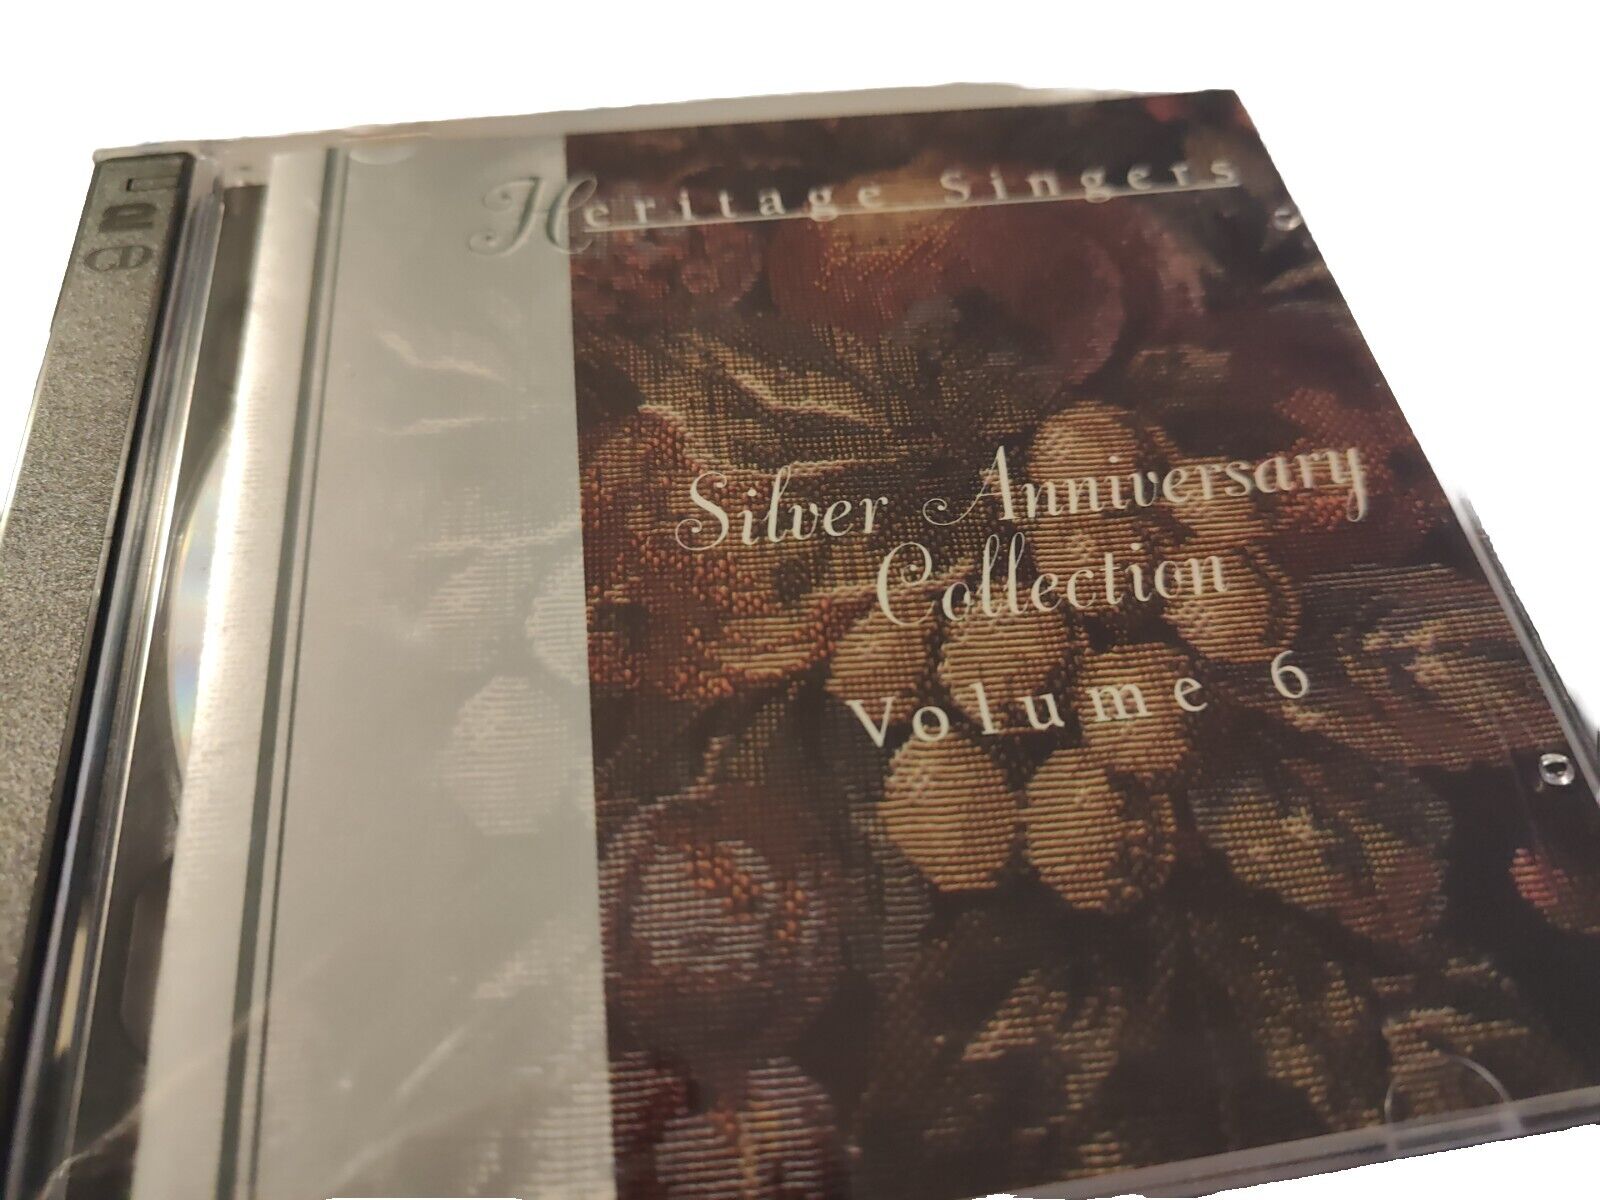 Heritage Singers Silver Anniversary Collection Volume 6 (2 CD Set) Spiritual 